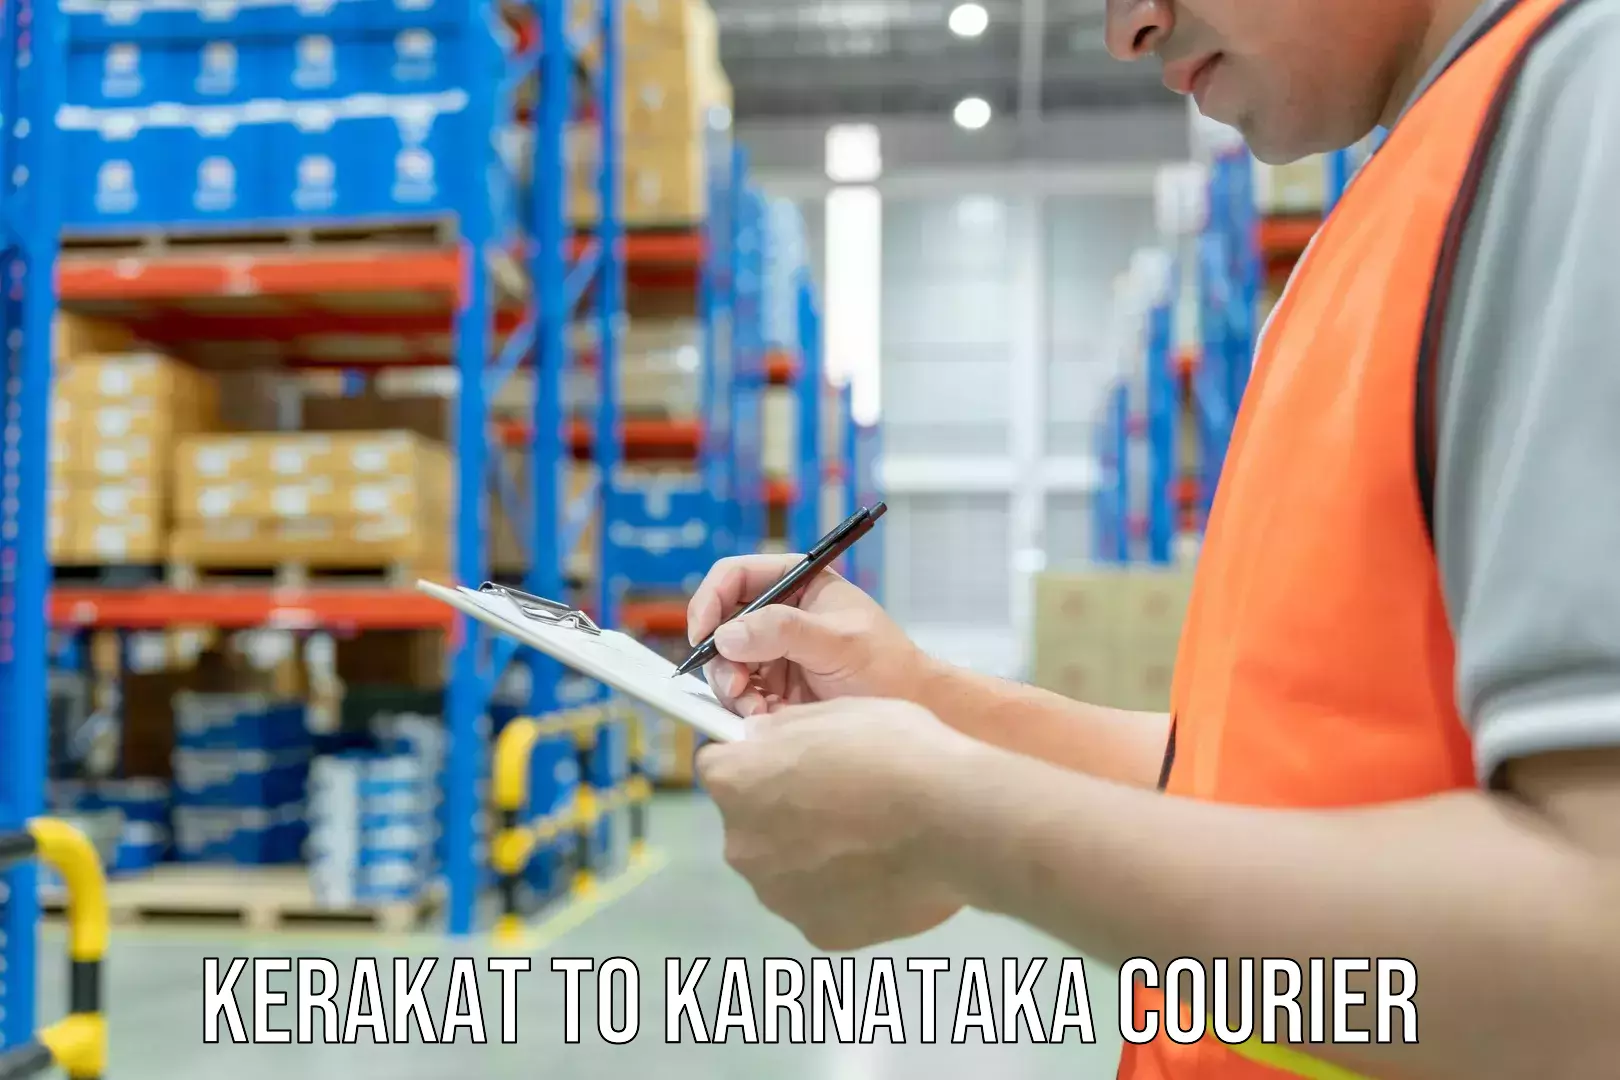 Quality moving company Kerakat to Karnataka